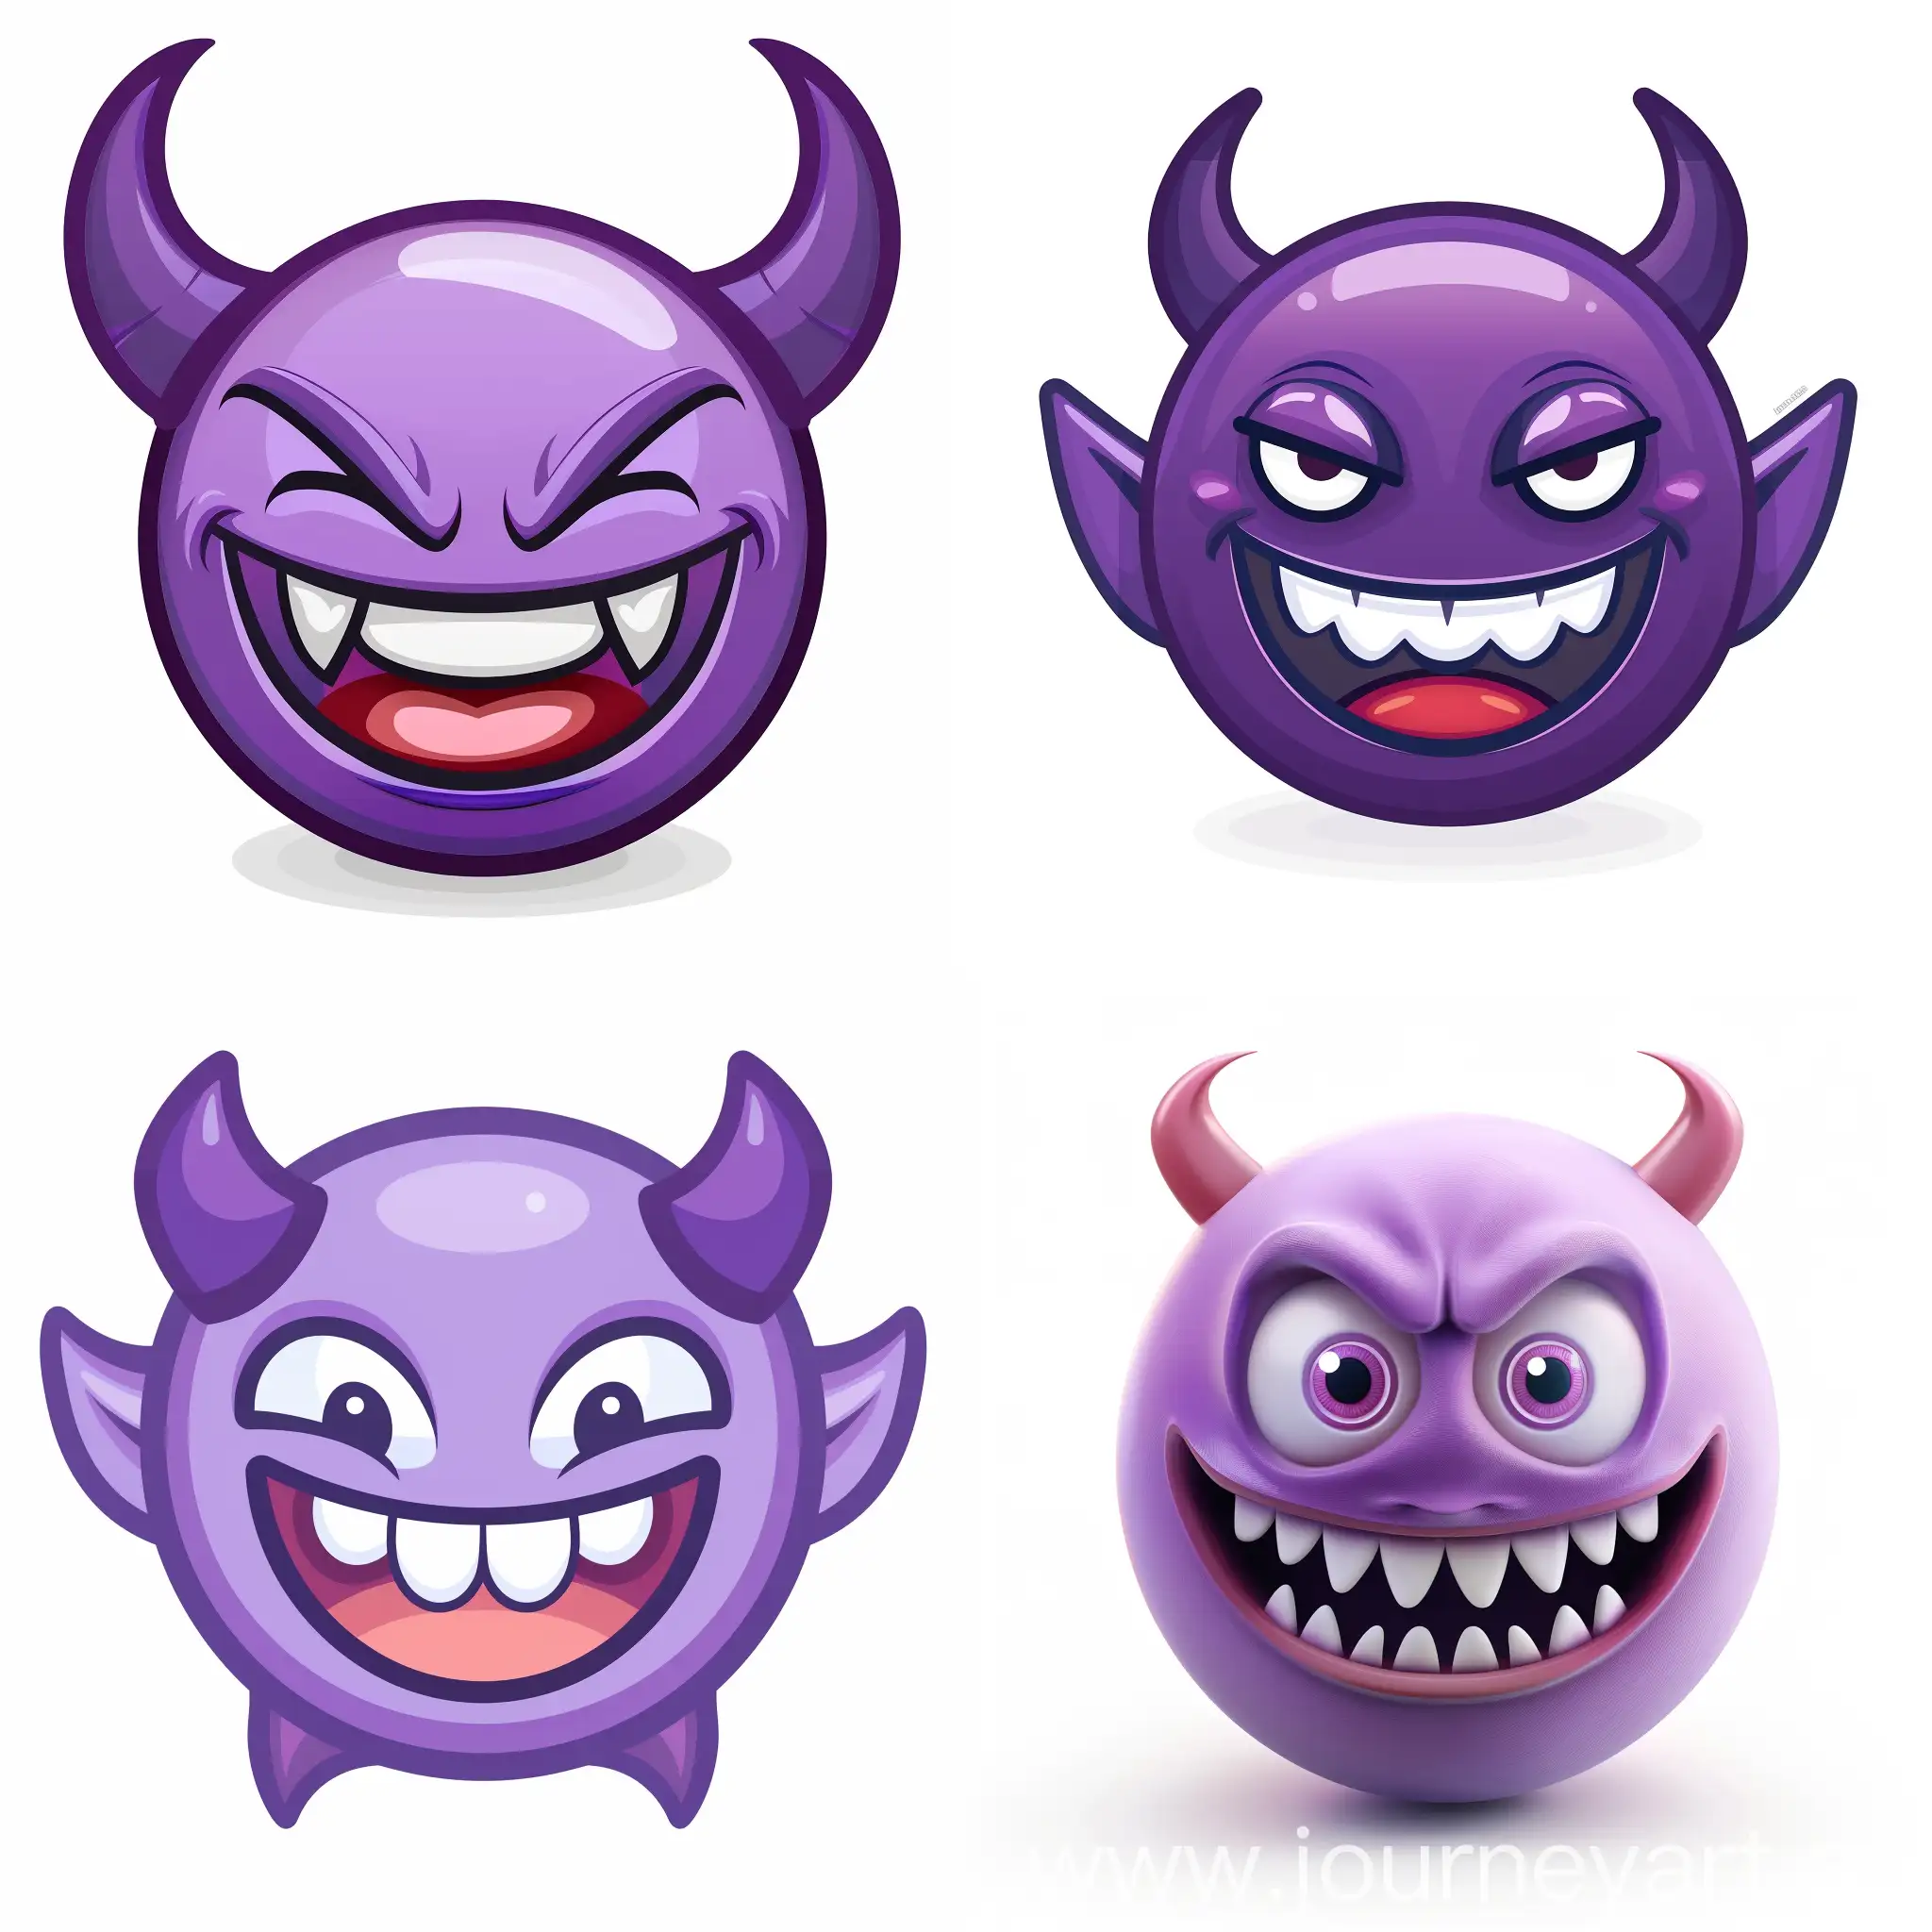 Cheerful-Purple-Demon-Emoji-Smiling-Vibrantly